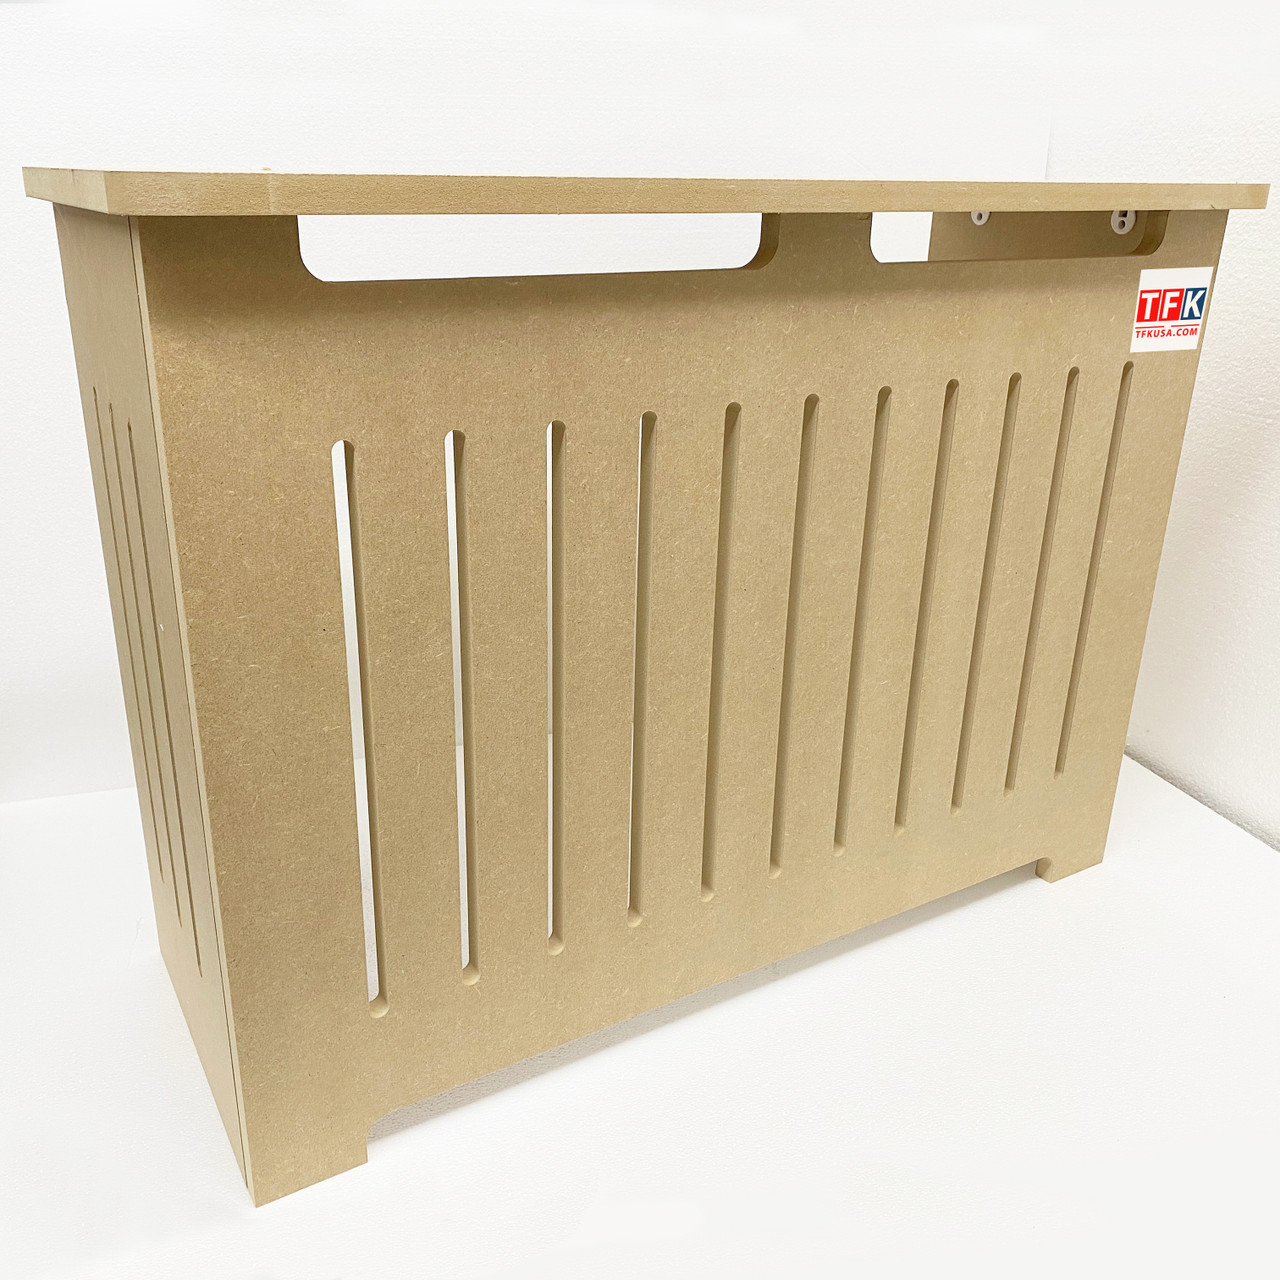 MDF Radiator Cover Heating Cabinet - Custom Made